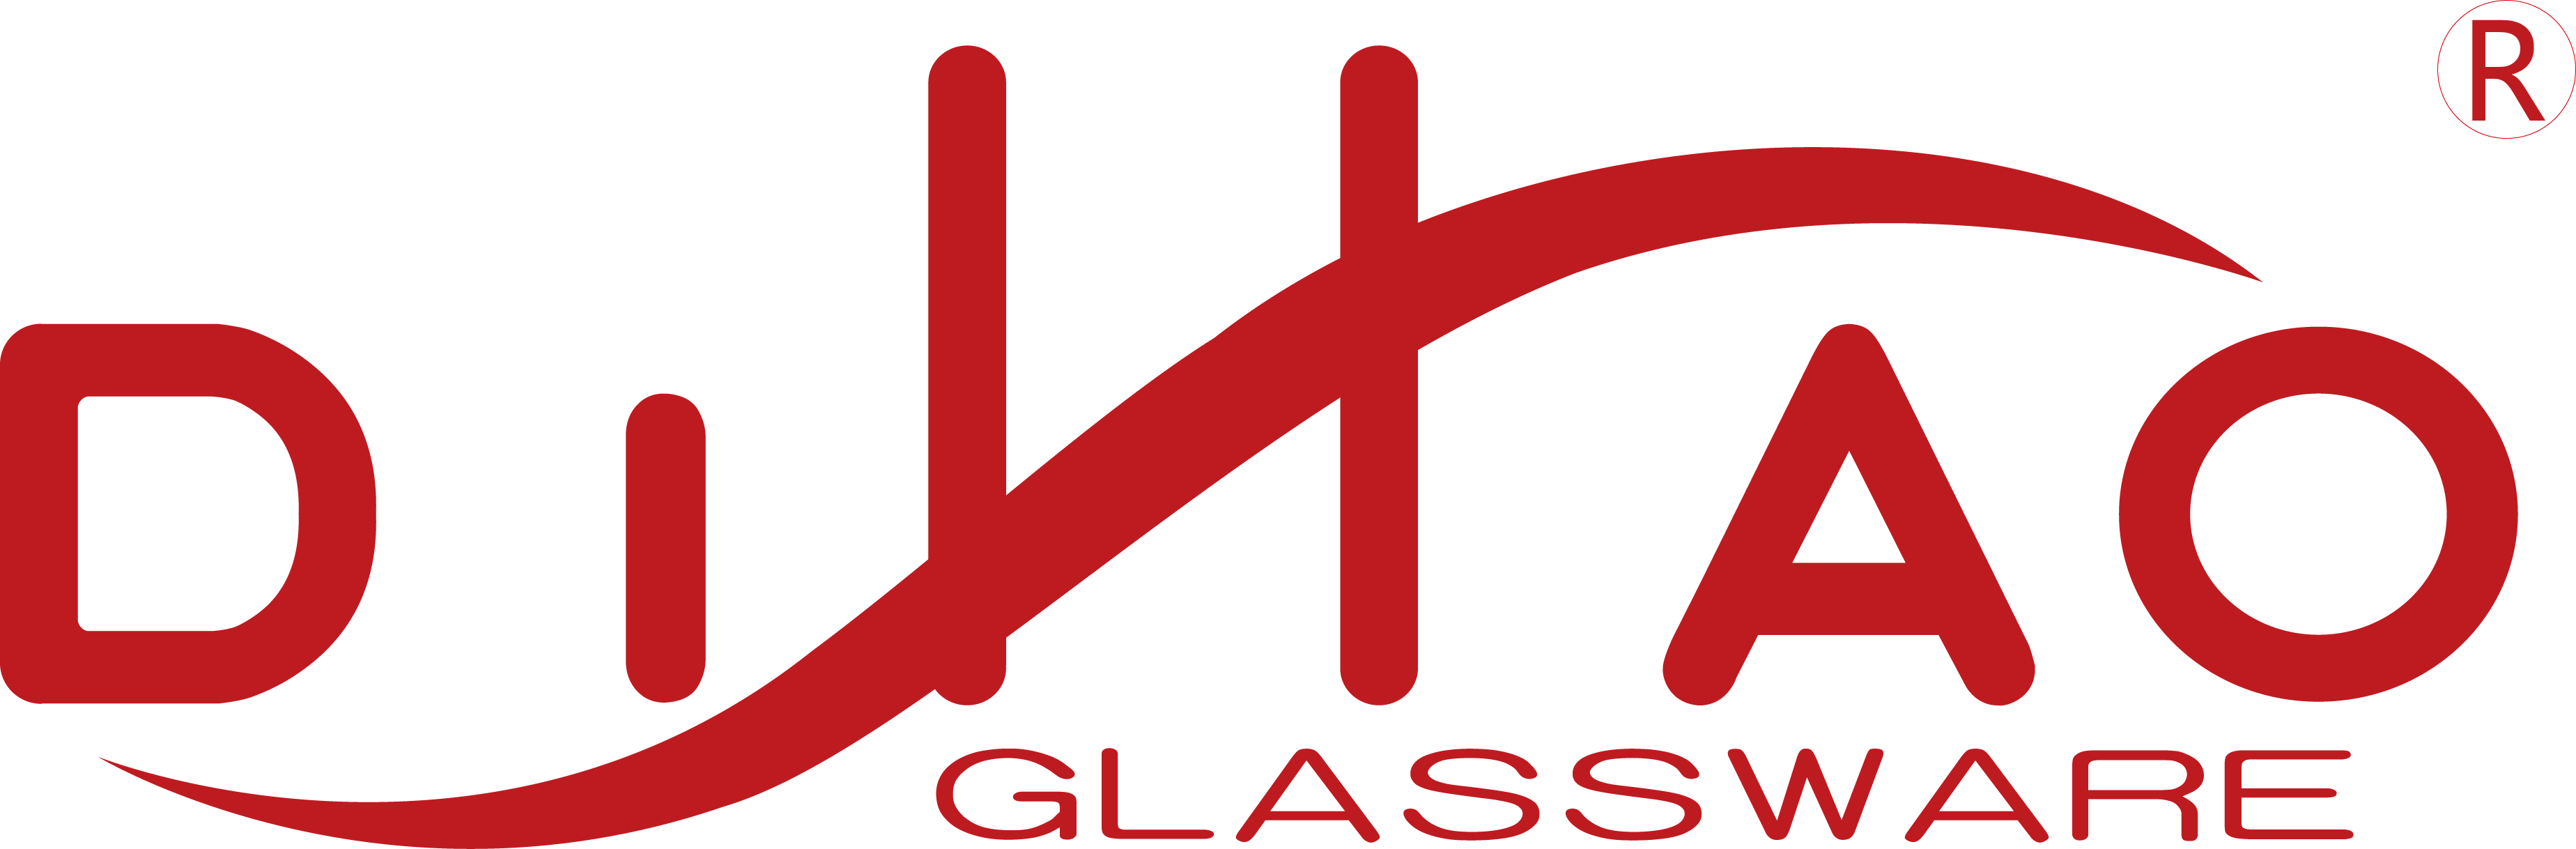 King glass Co., Ltd